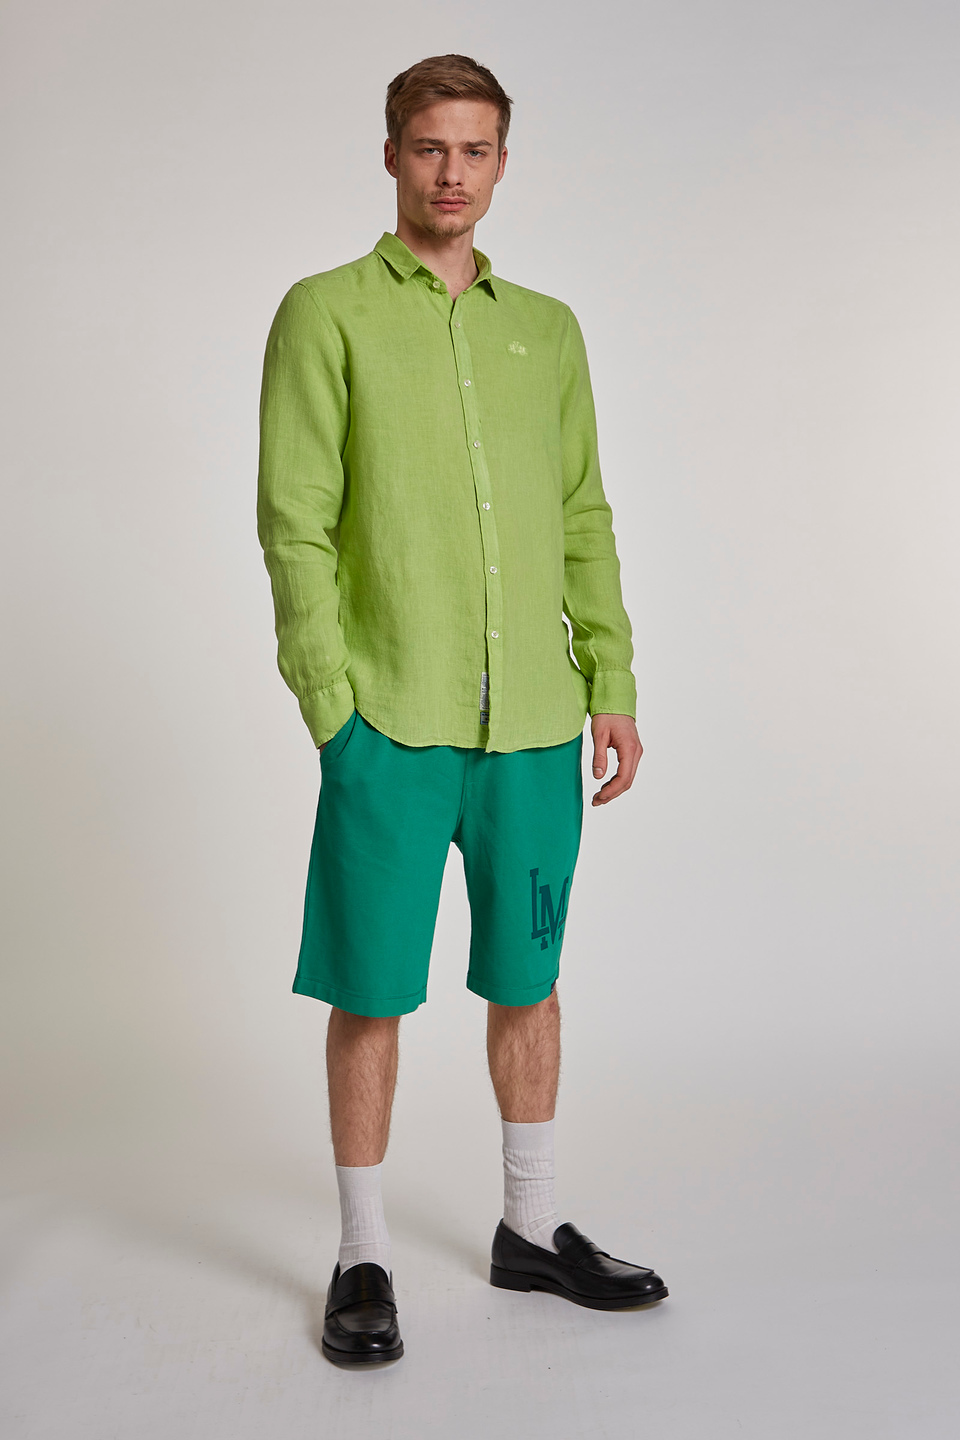 Men's comfort-fit cotton Bermuda shorts - La Martina - Official Online Shop